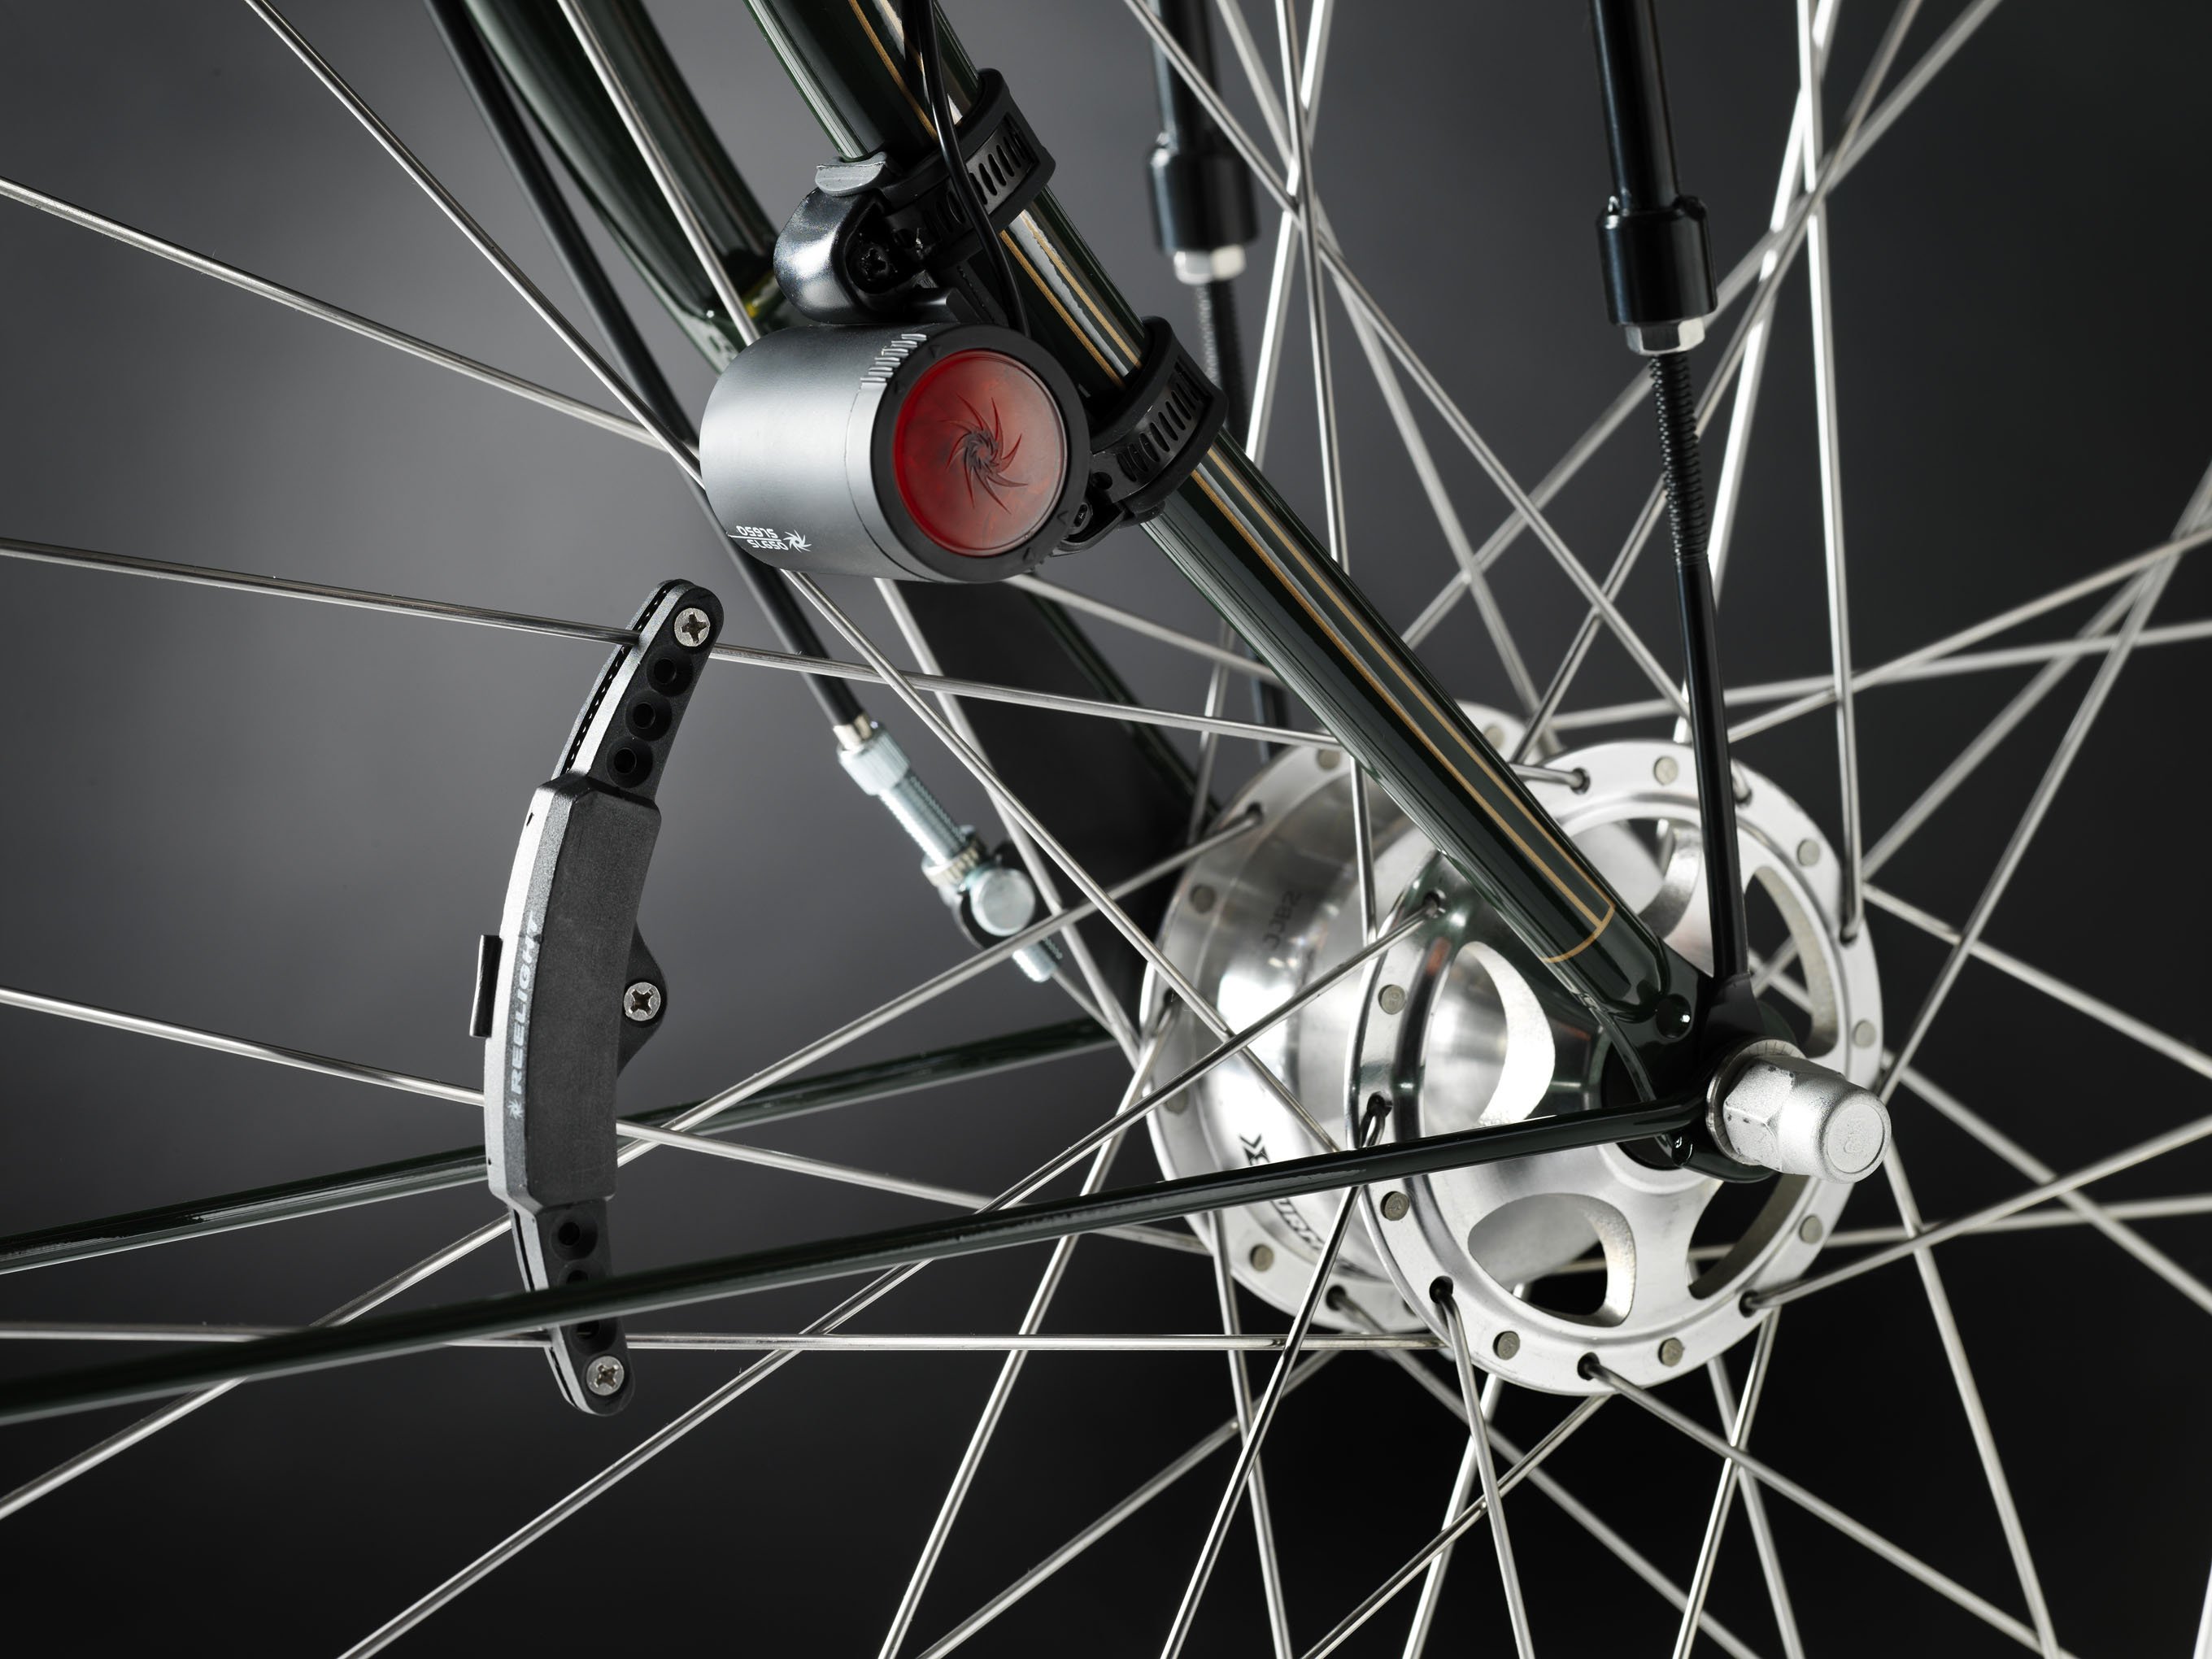 Ruckus Duke træthed Magnet forlygte SL620 splitmodel til centermontering - 229,00 :  Cykelgear.dk - Cykelgear.dk